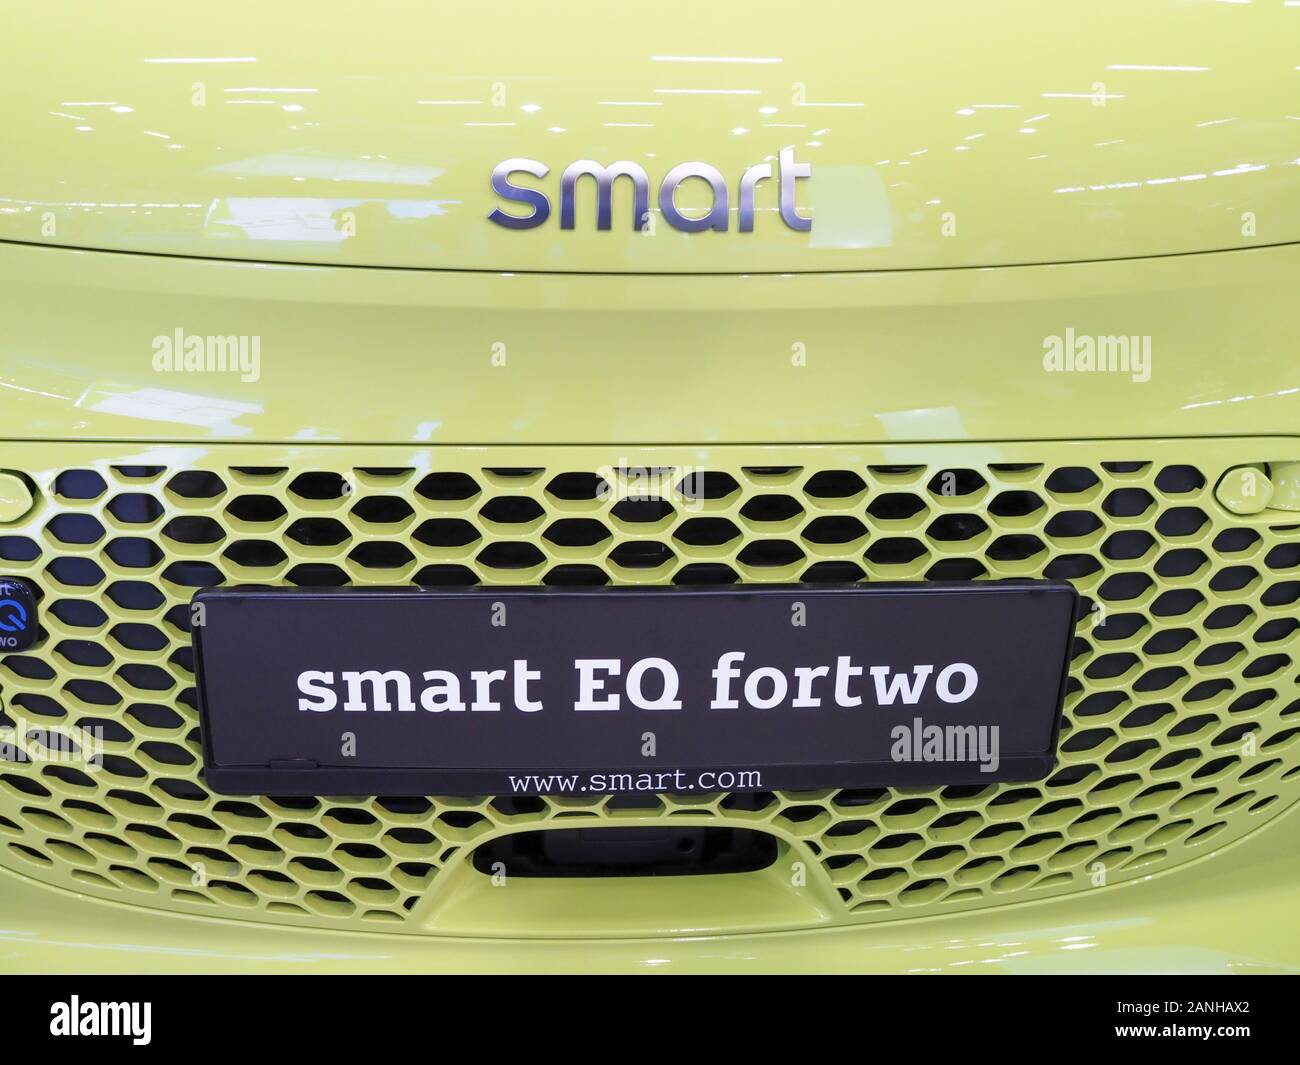 Vienna Auto Show 2020, Smart EQ fortwo Stock Photo